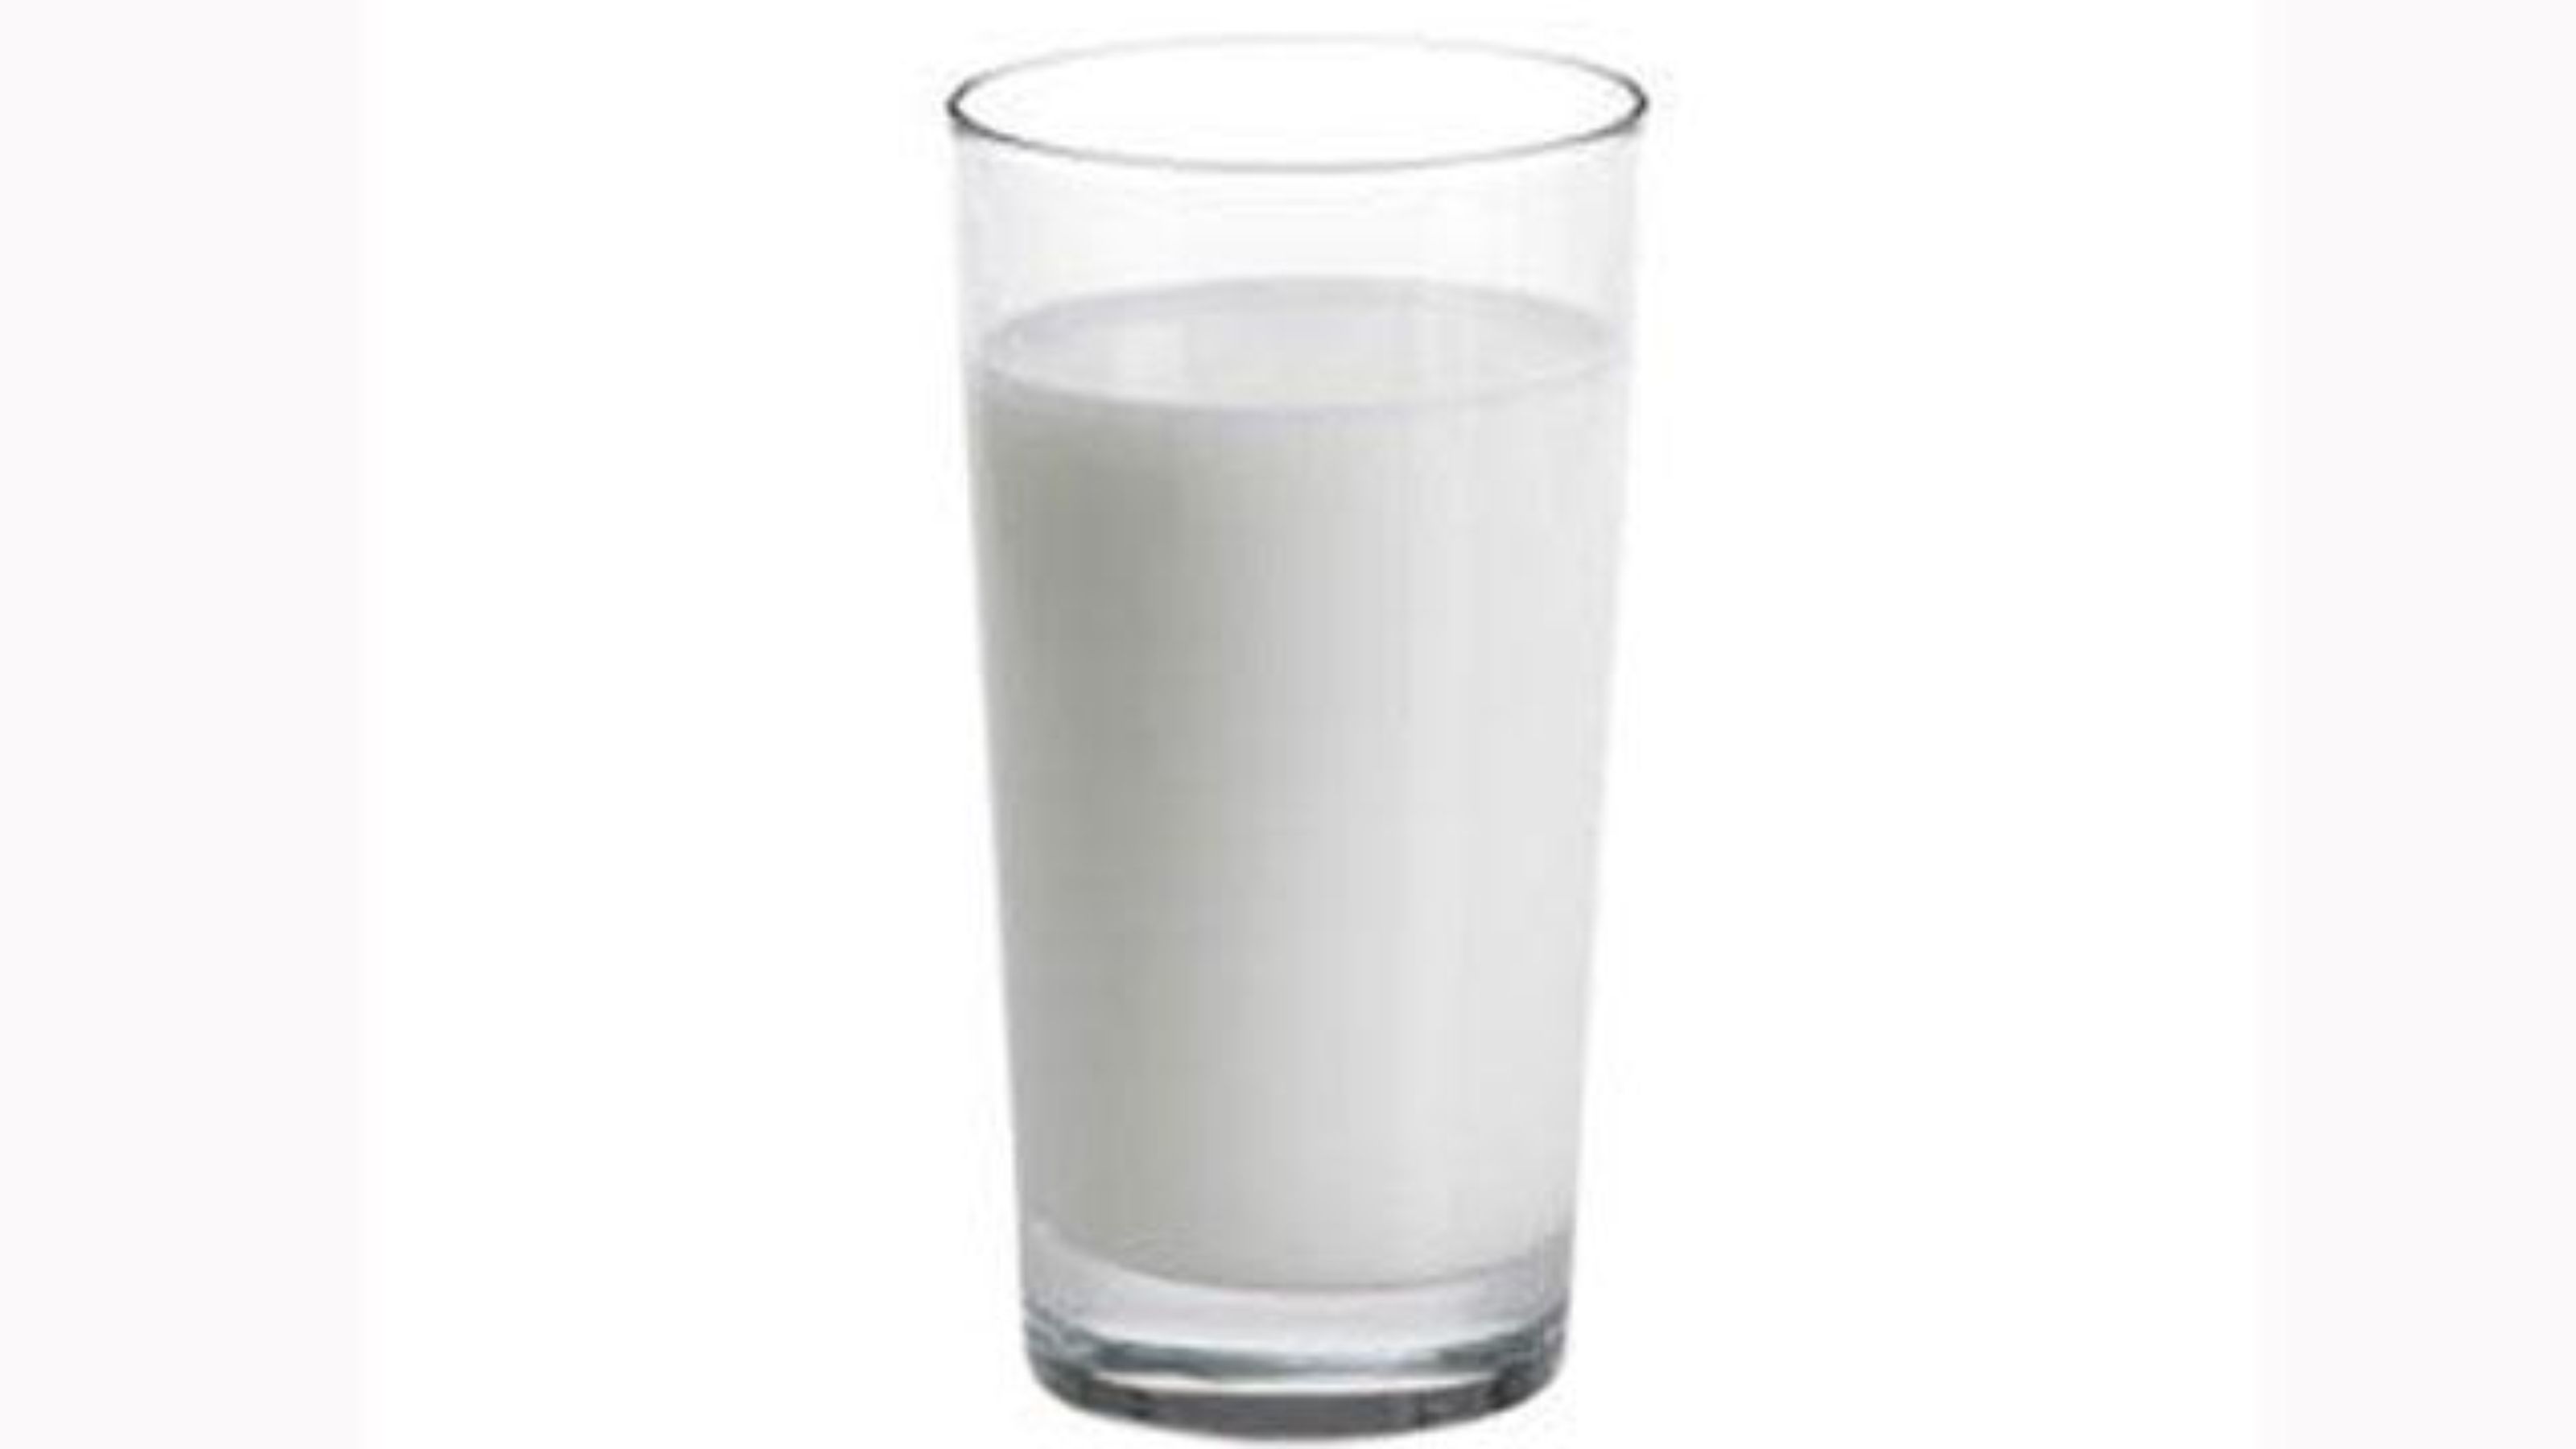 clipart glass of milk - photo #35